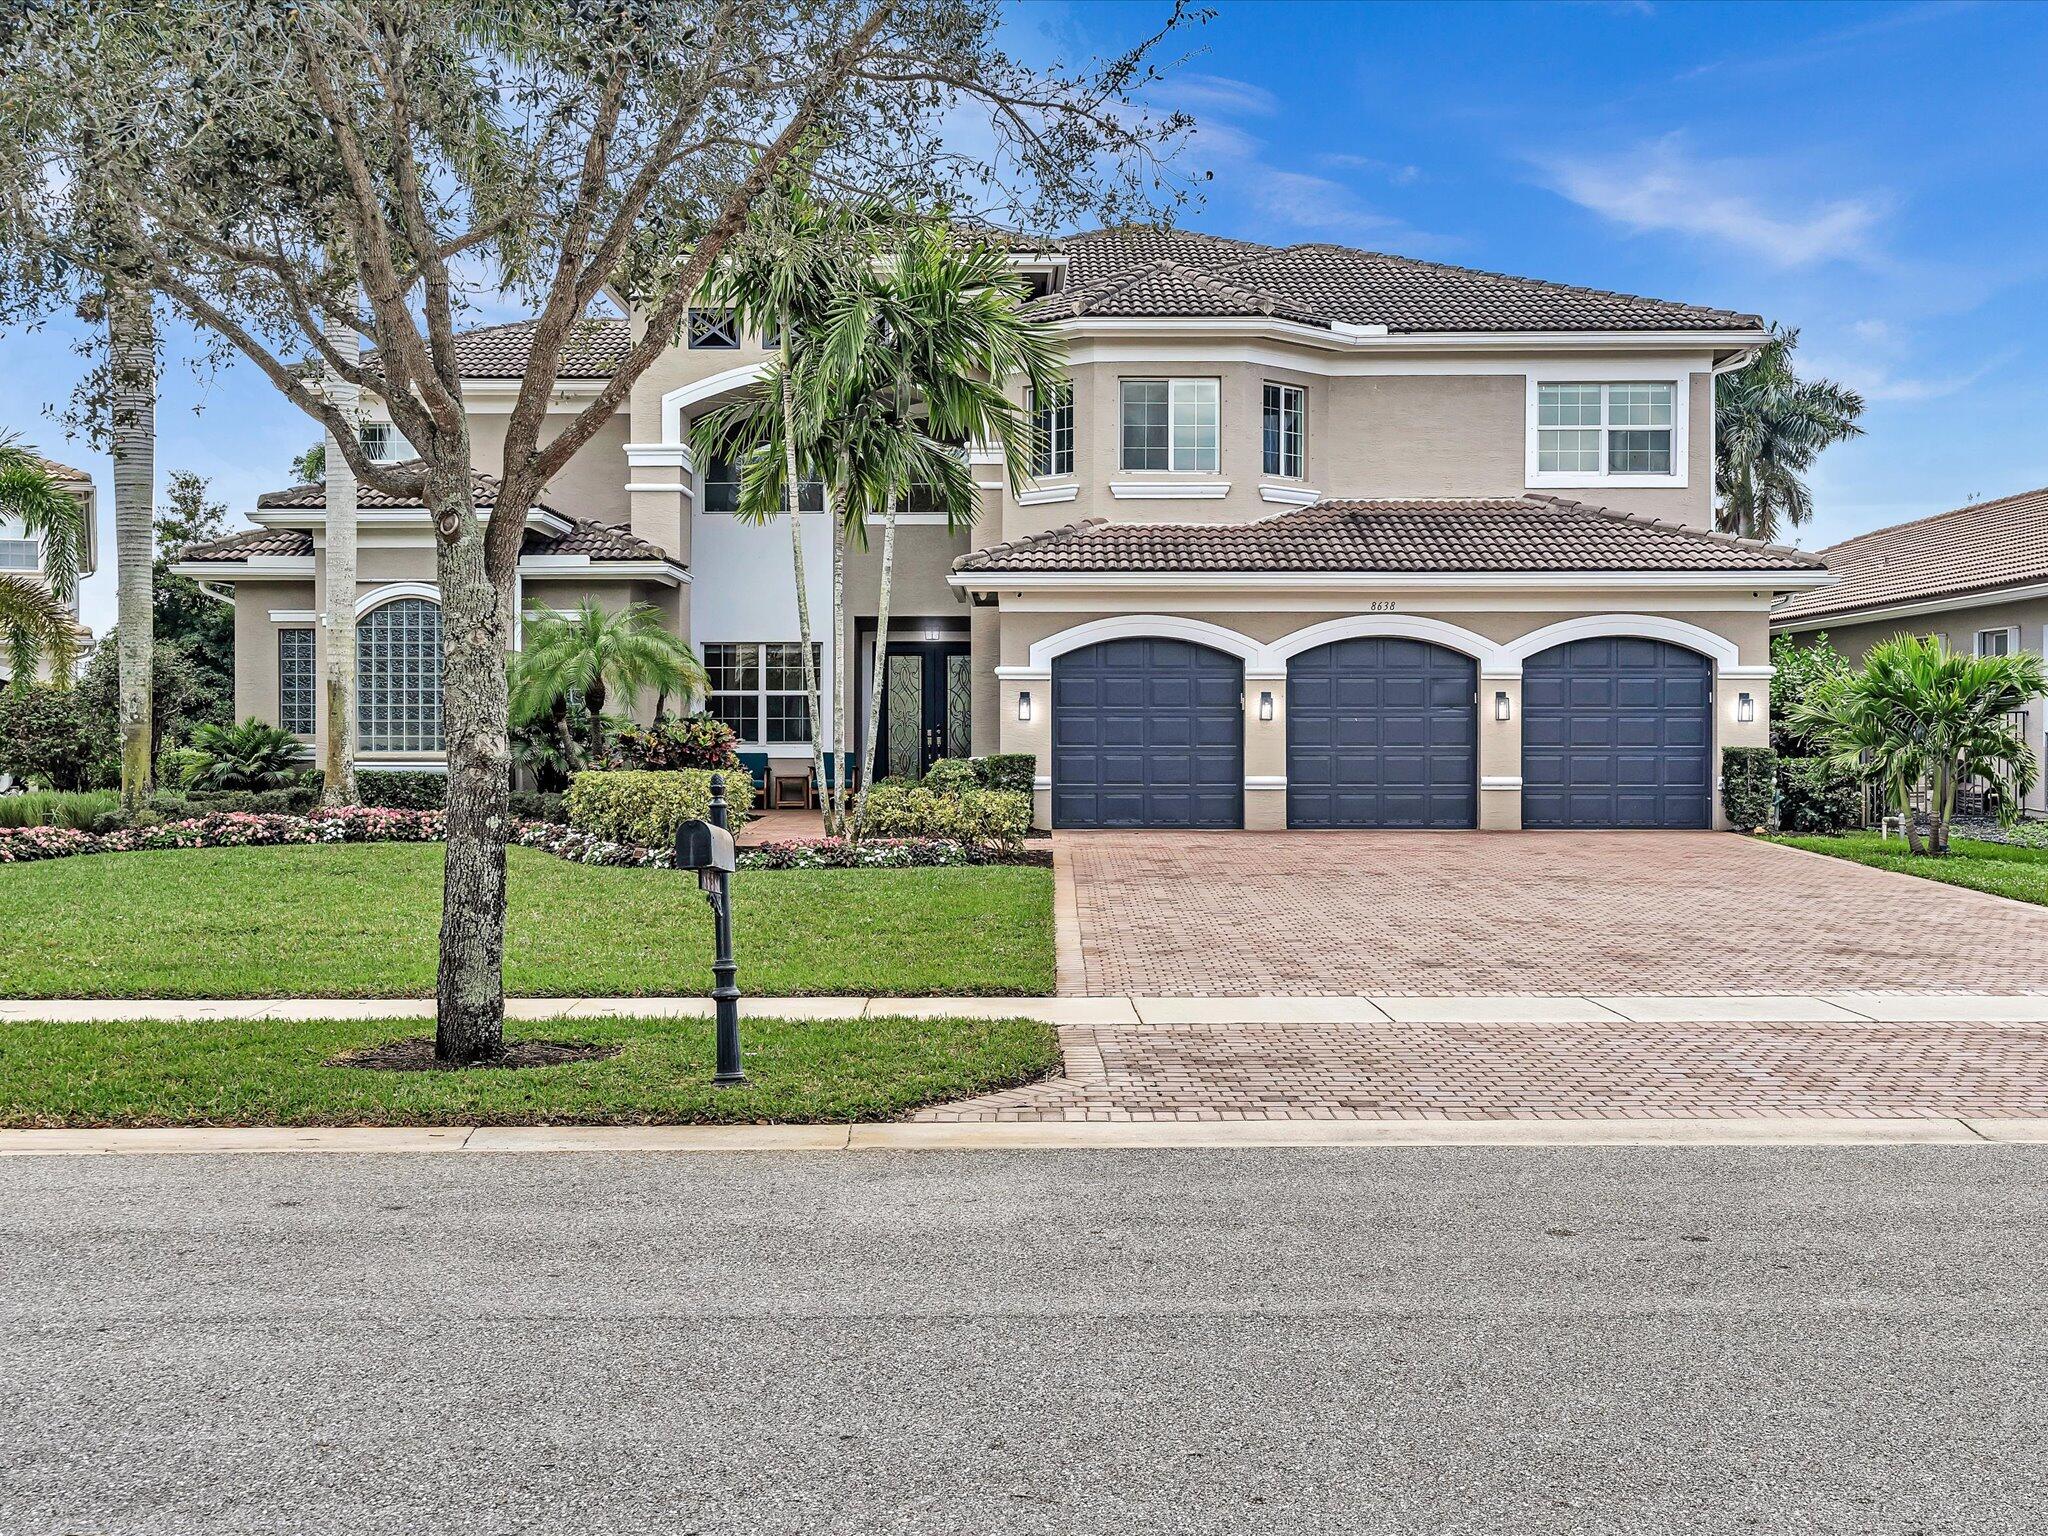 Property for Sale at 8638 Daystar Ridge Point, Boynton Beach, Palm Beach County, Florida - Bedrooms: 6 
Bathrooms: 5.5  - $1,770,000